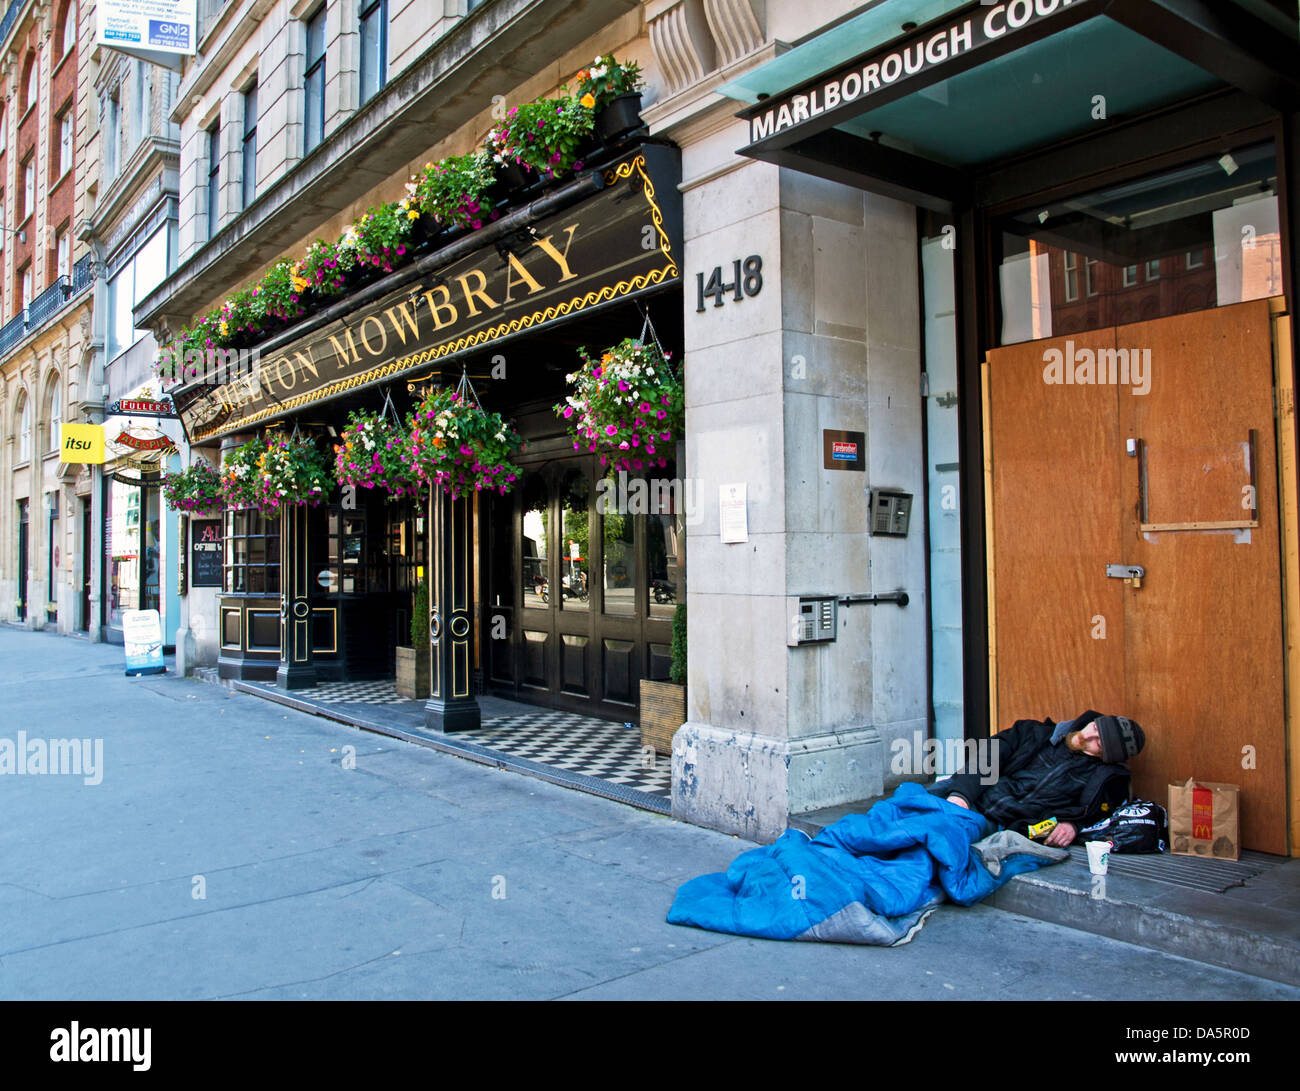 Homeless man asleep outside pub, Holborn, London, England, United Kingdom Stock Photo